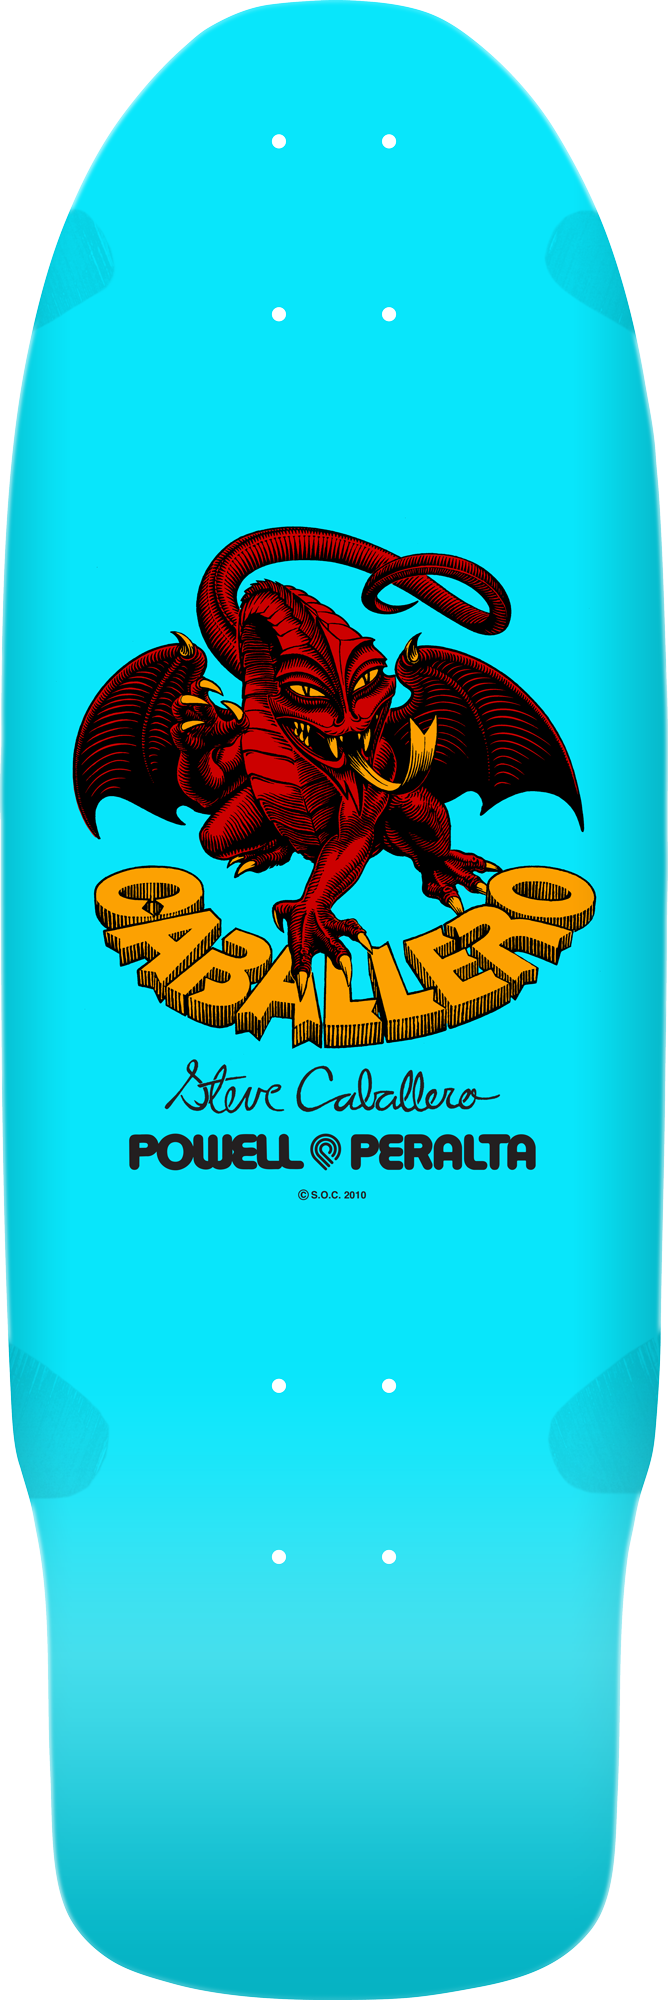 Powell Peralta Bones Brigade Series 15 Lt. Blue Caballero Deck (Preorder for 3/20)